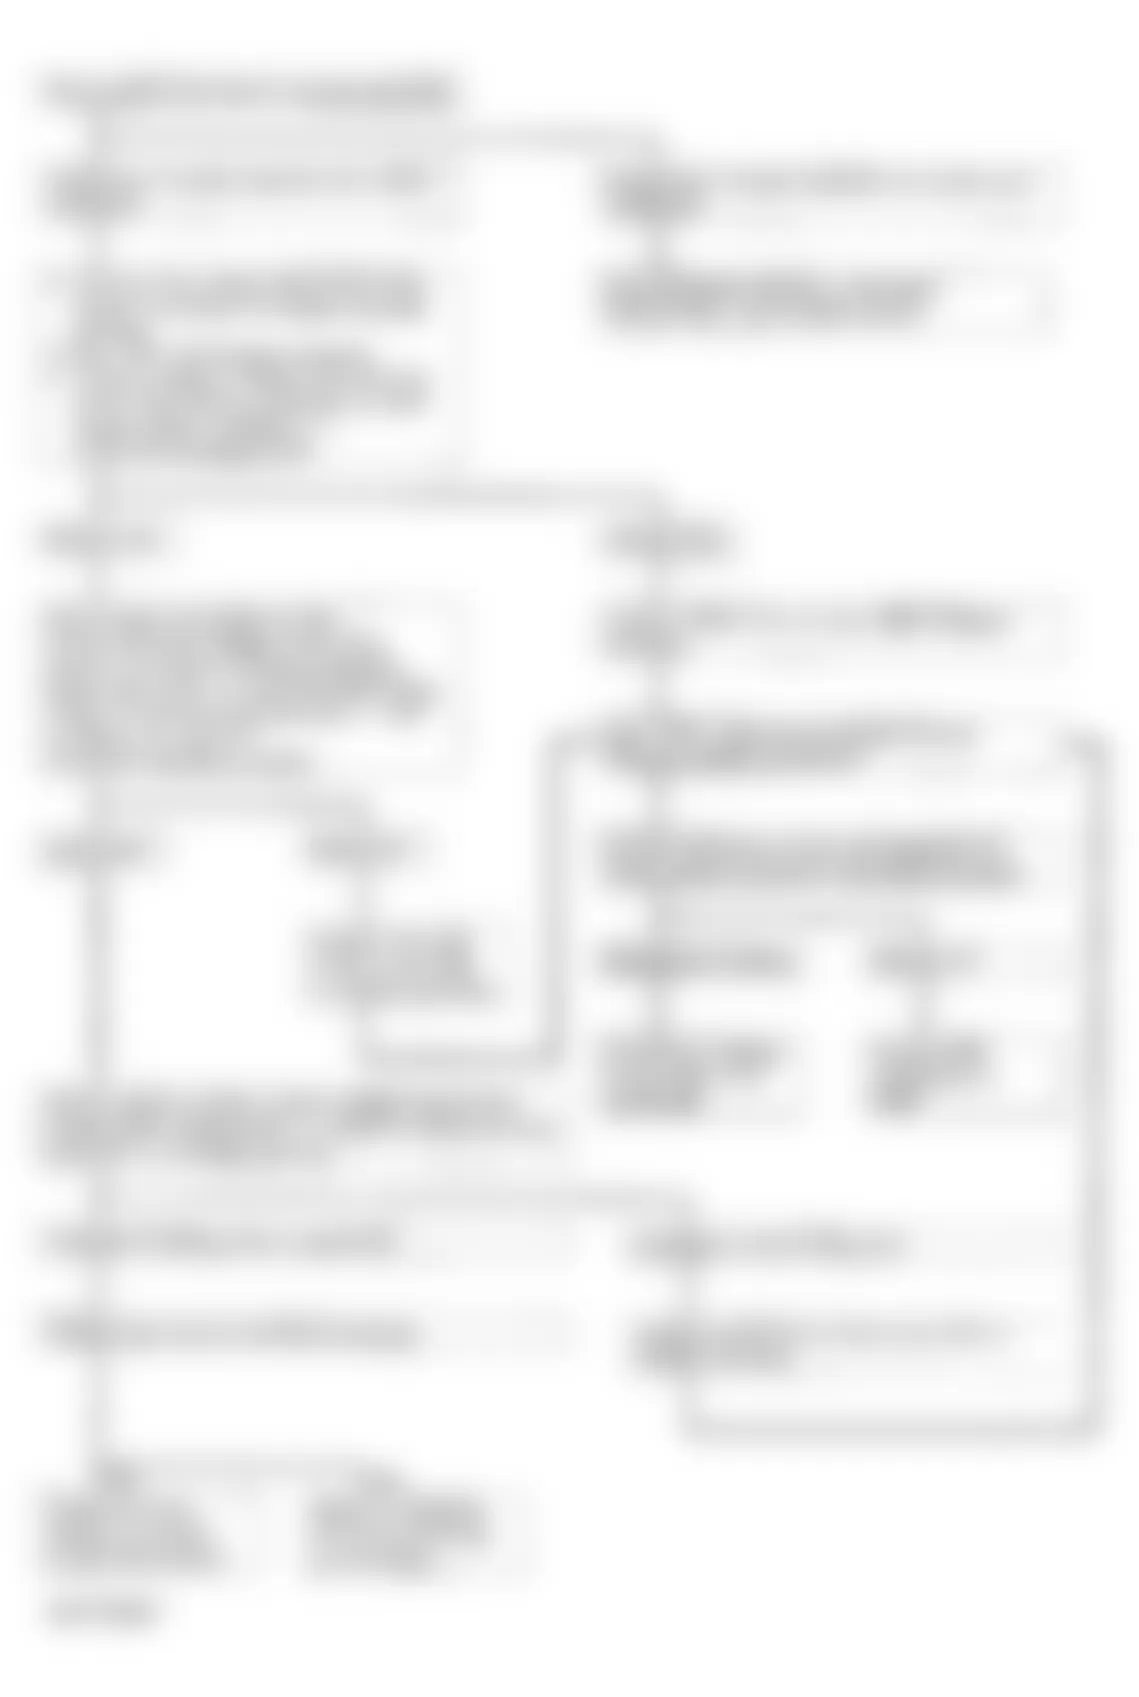 Isuzu Pickup S 1995 - Component Locations -  Code 61, 62 - Diagnostic Flowchart (2 Of 2)